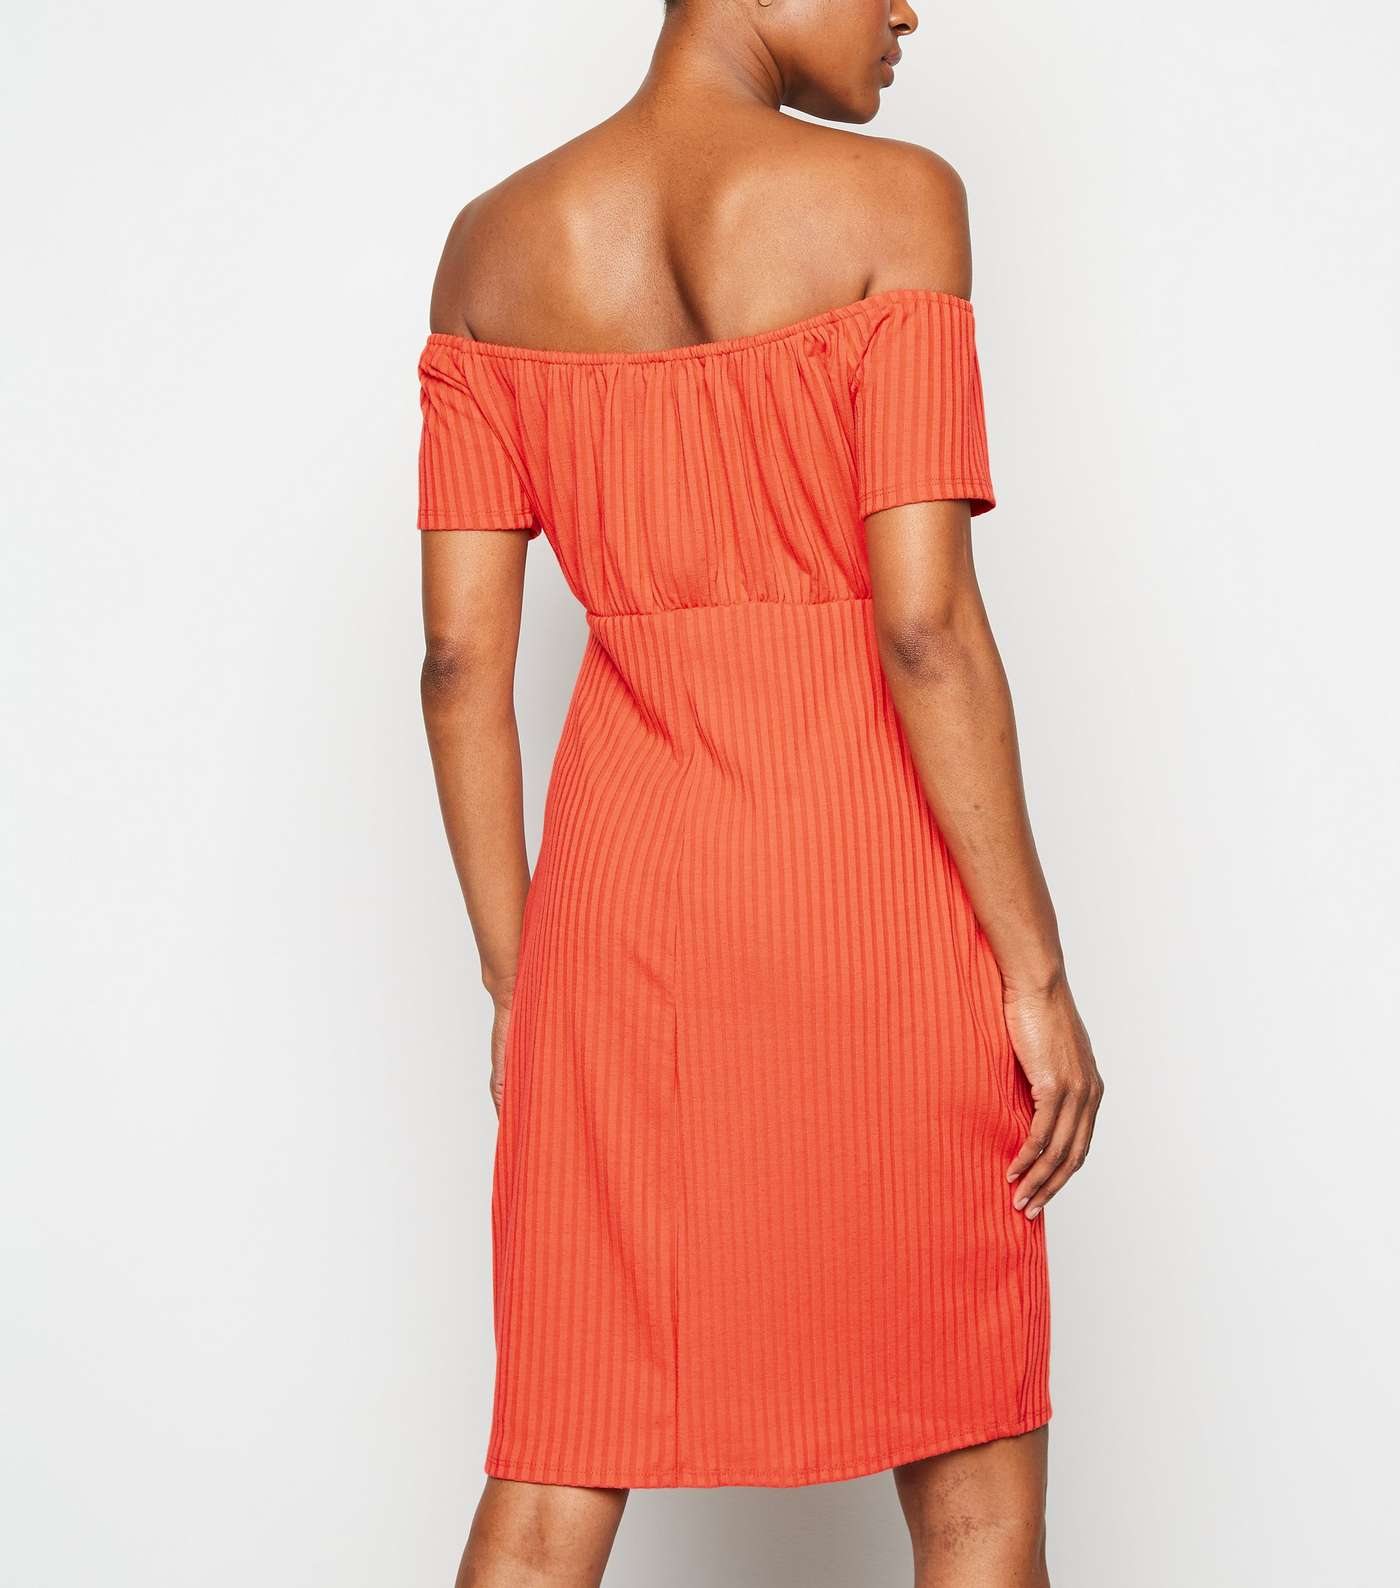 Apricot Bright Orange Ribbed Bardot Dress Image 3